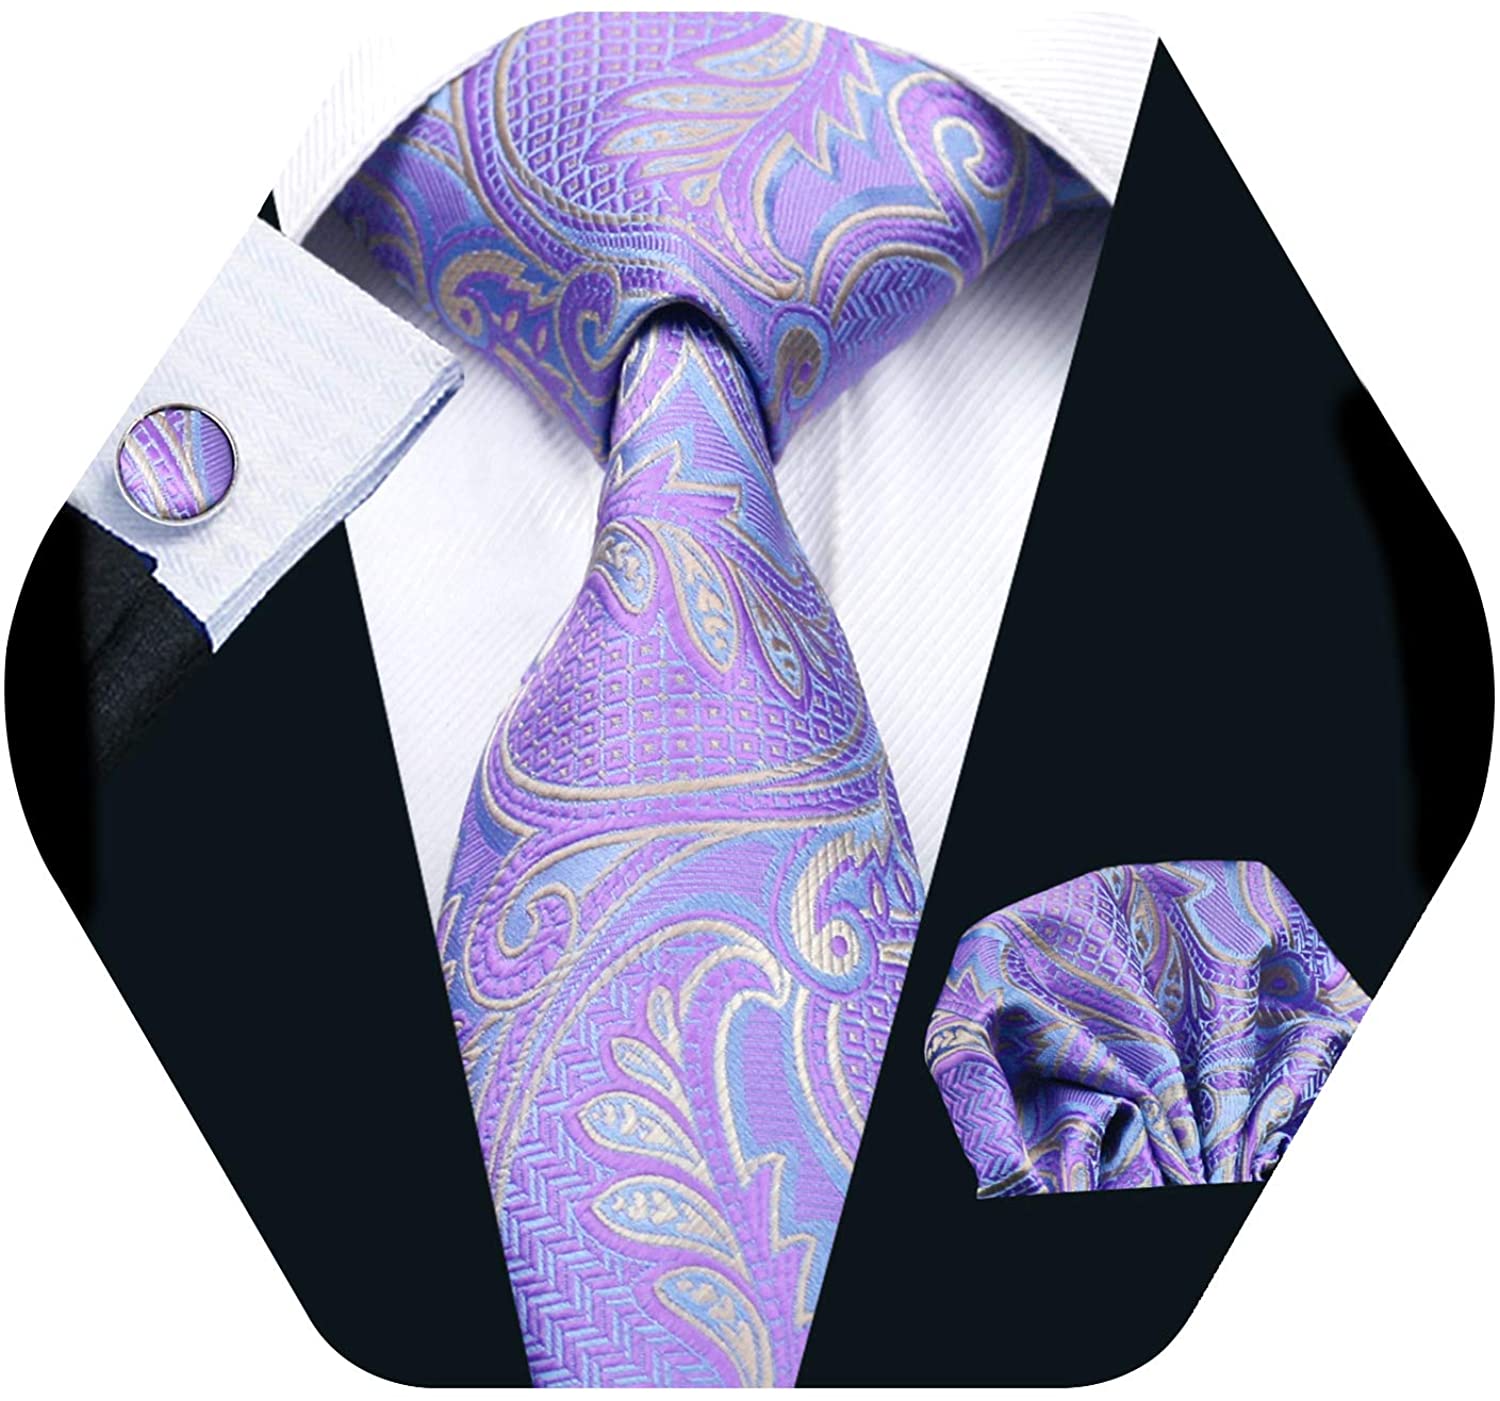 Barry.Wang Men Tie Set Solid Silk Necktie Pocket Square Cufflinks Extra Long Tie